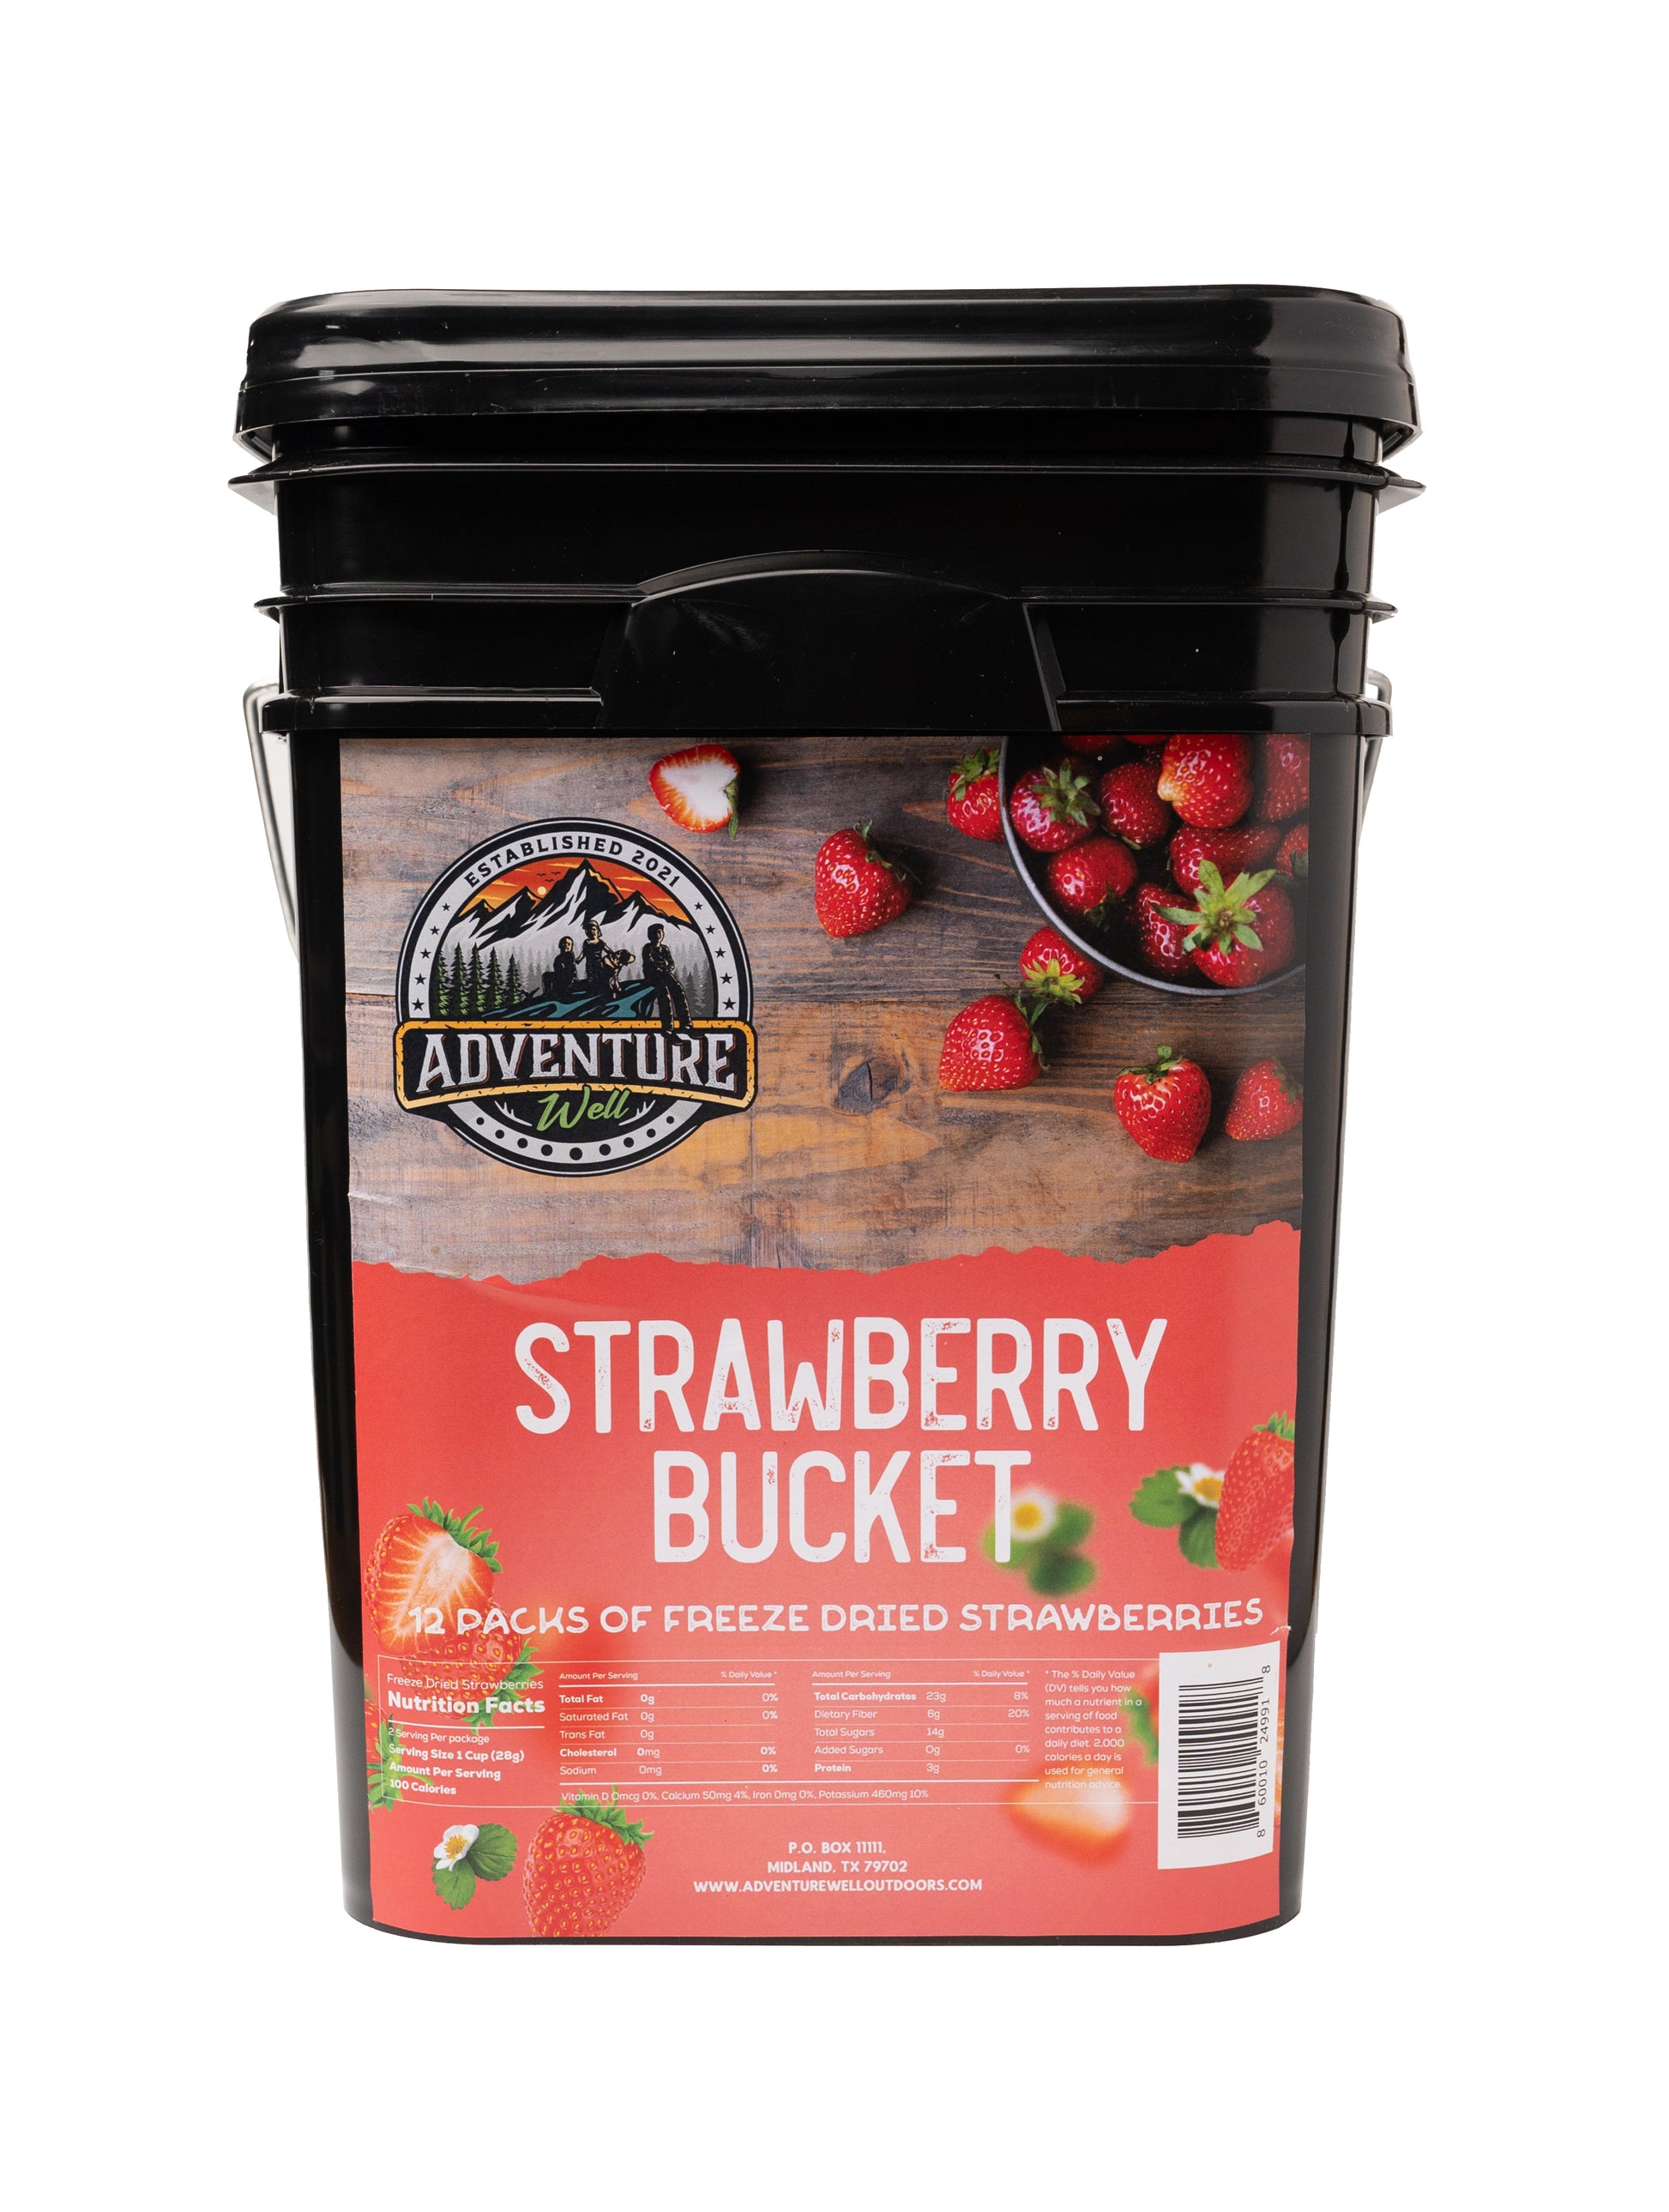 Strawberry bucket - Adventure Well